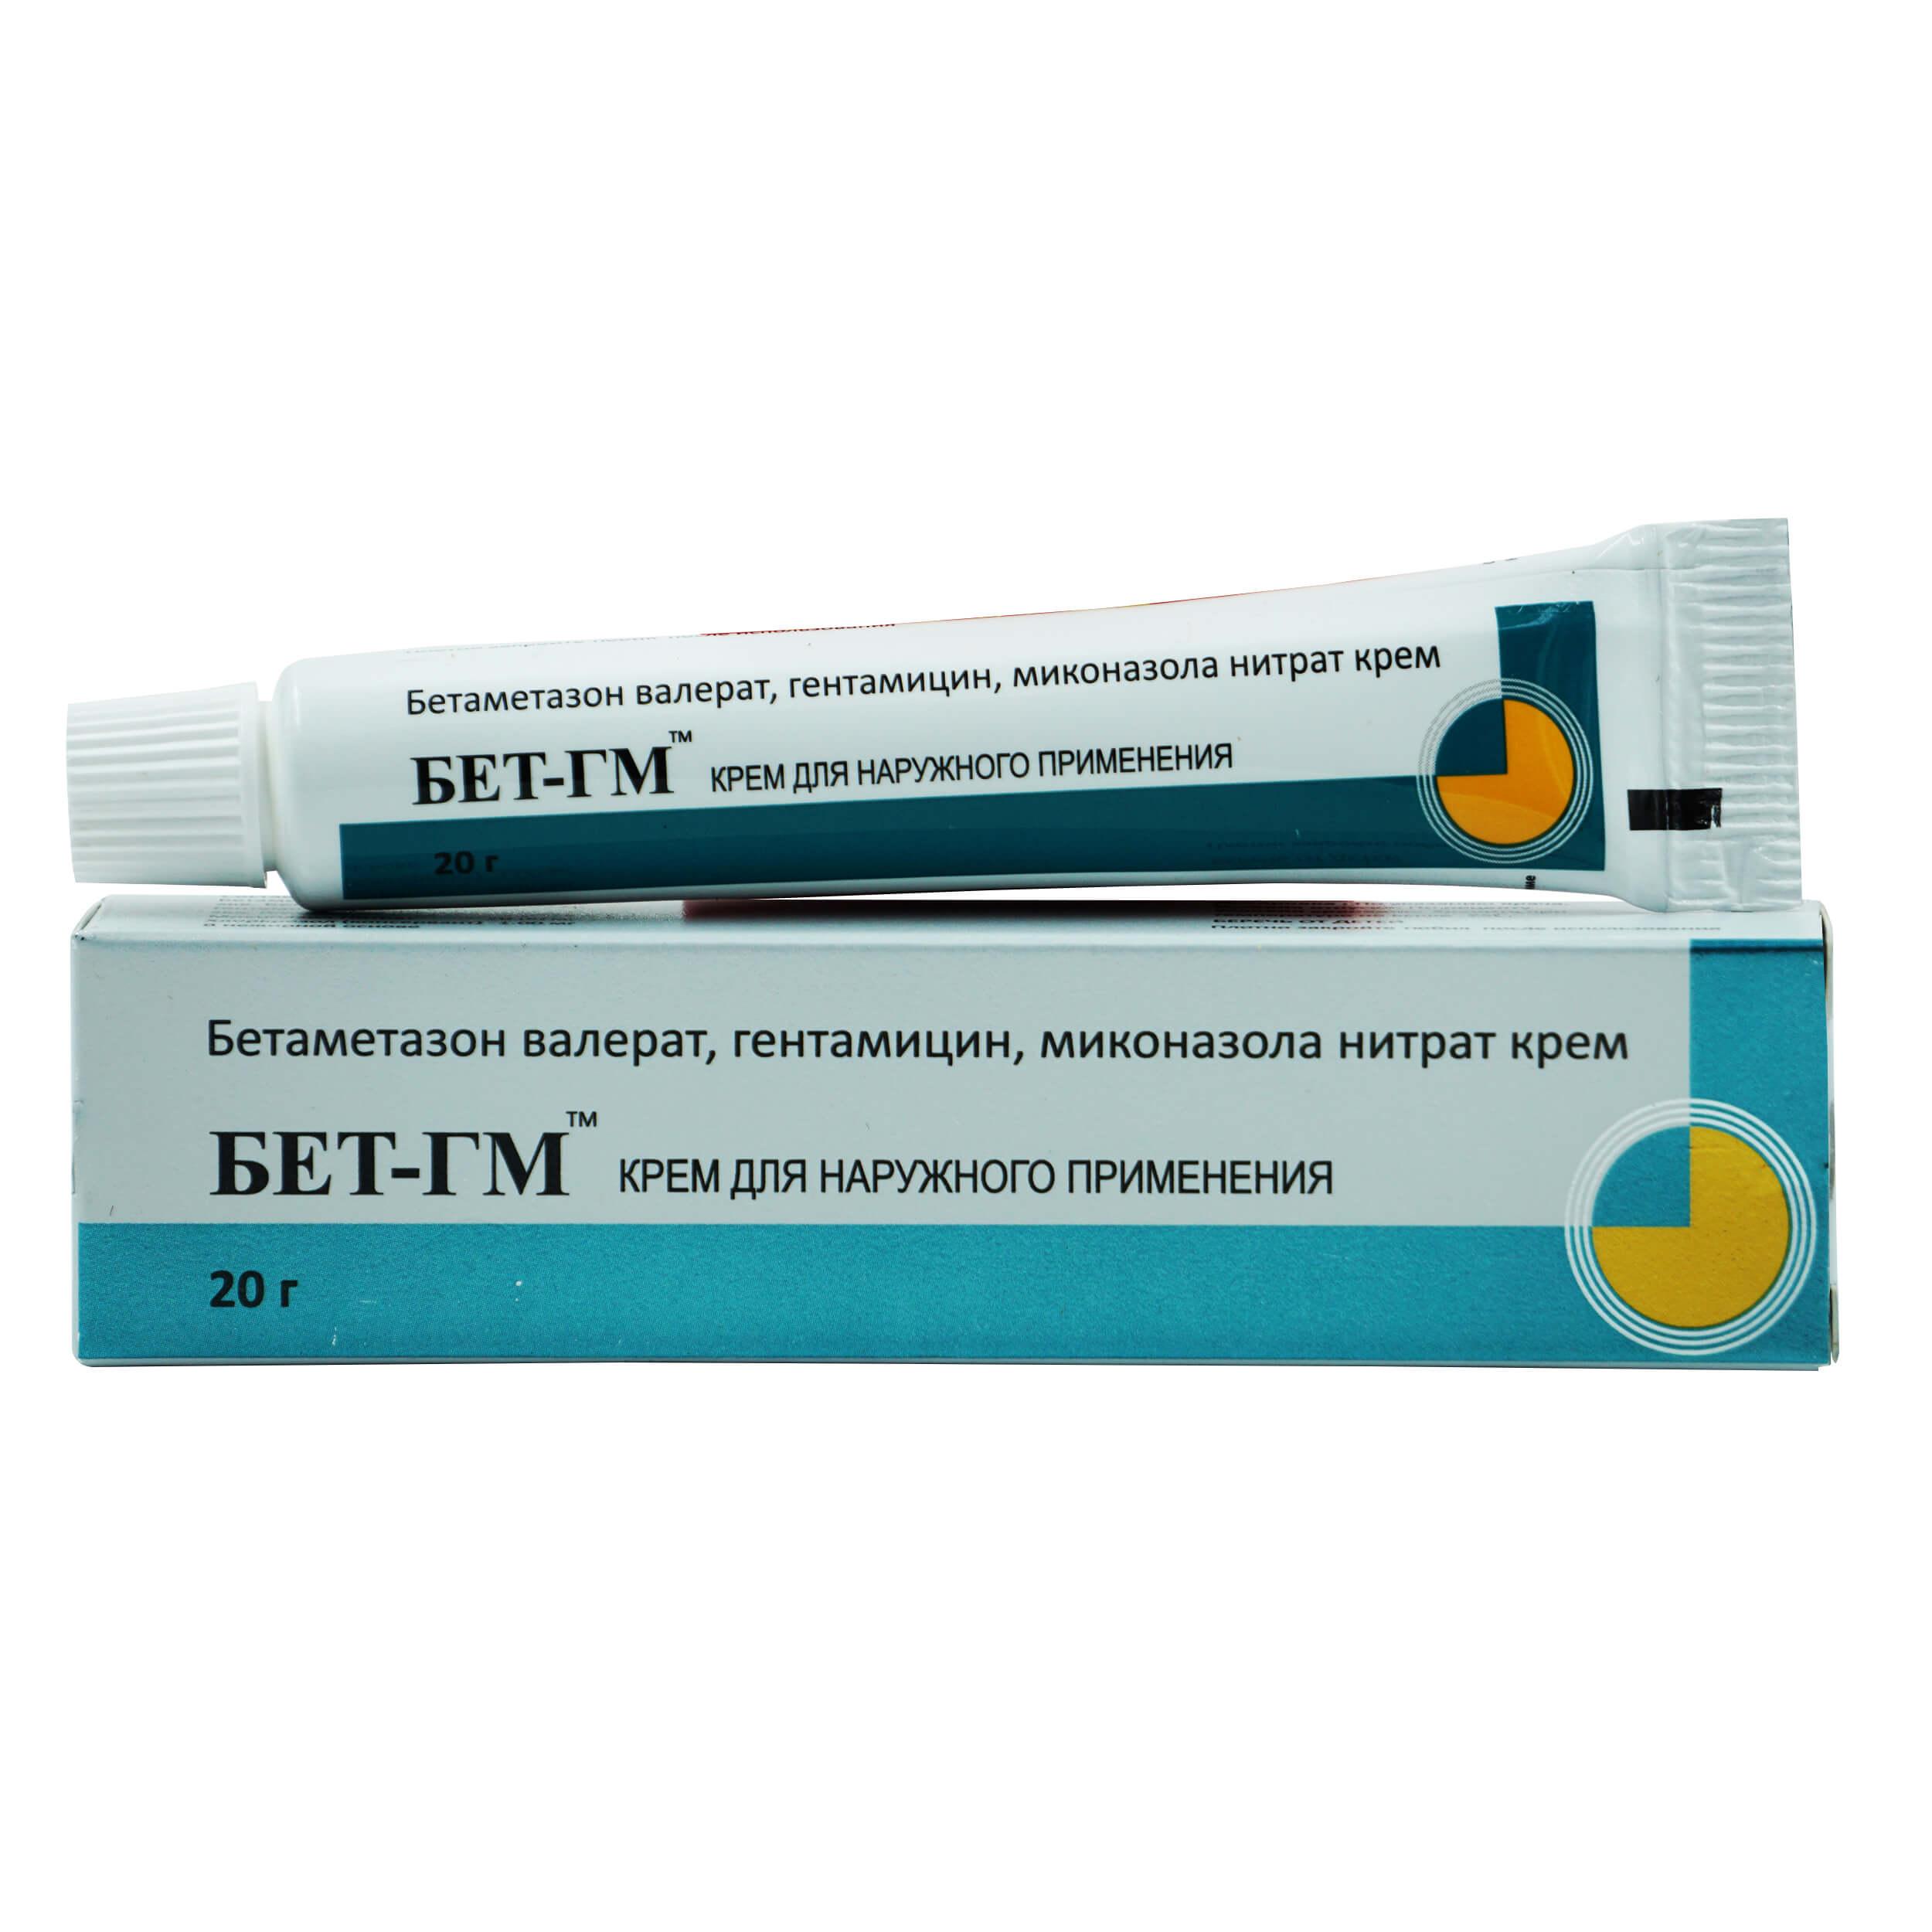 BET-GM krem 20 mg